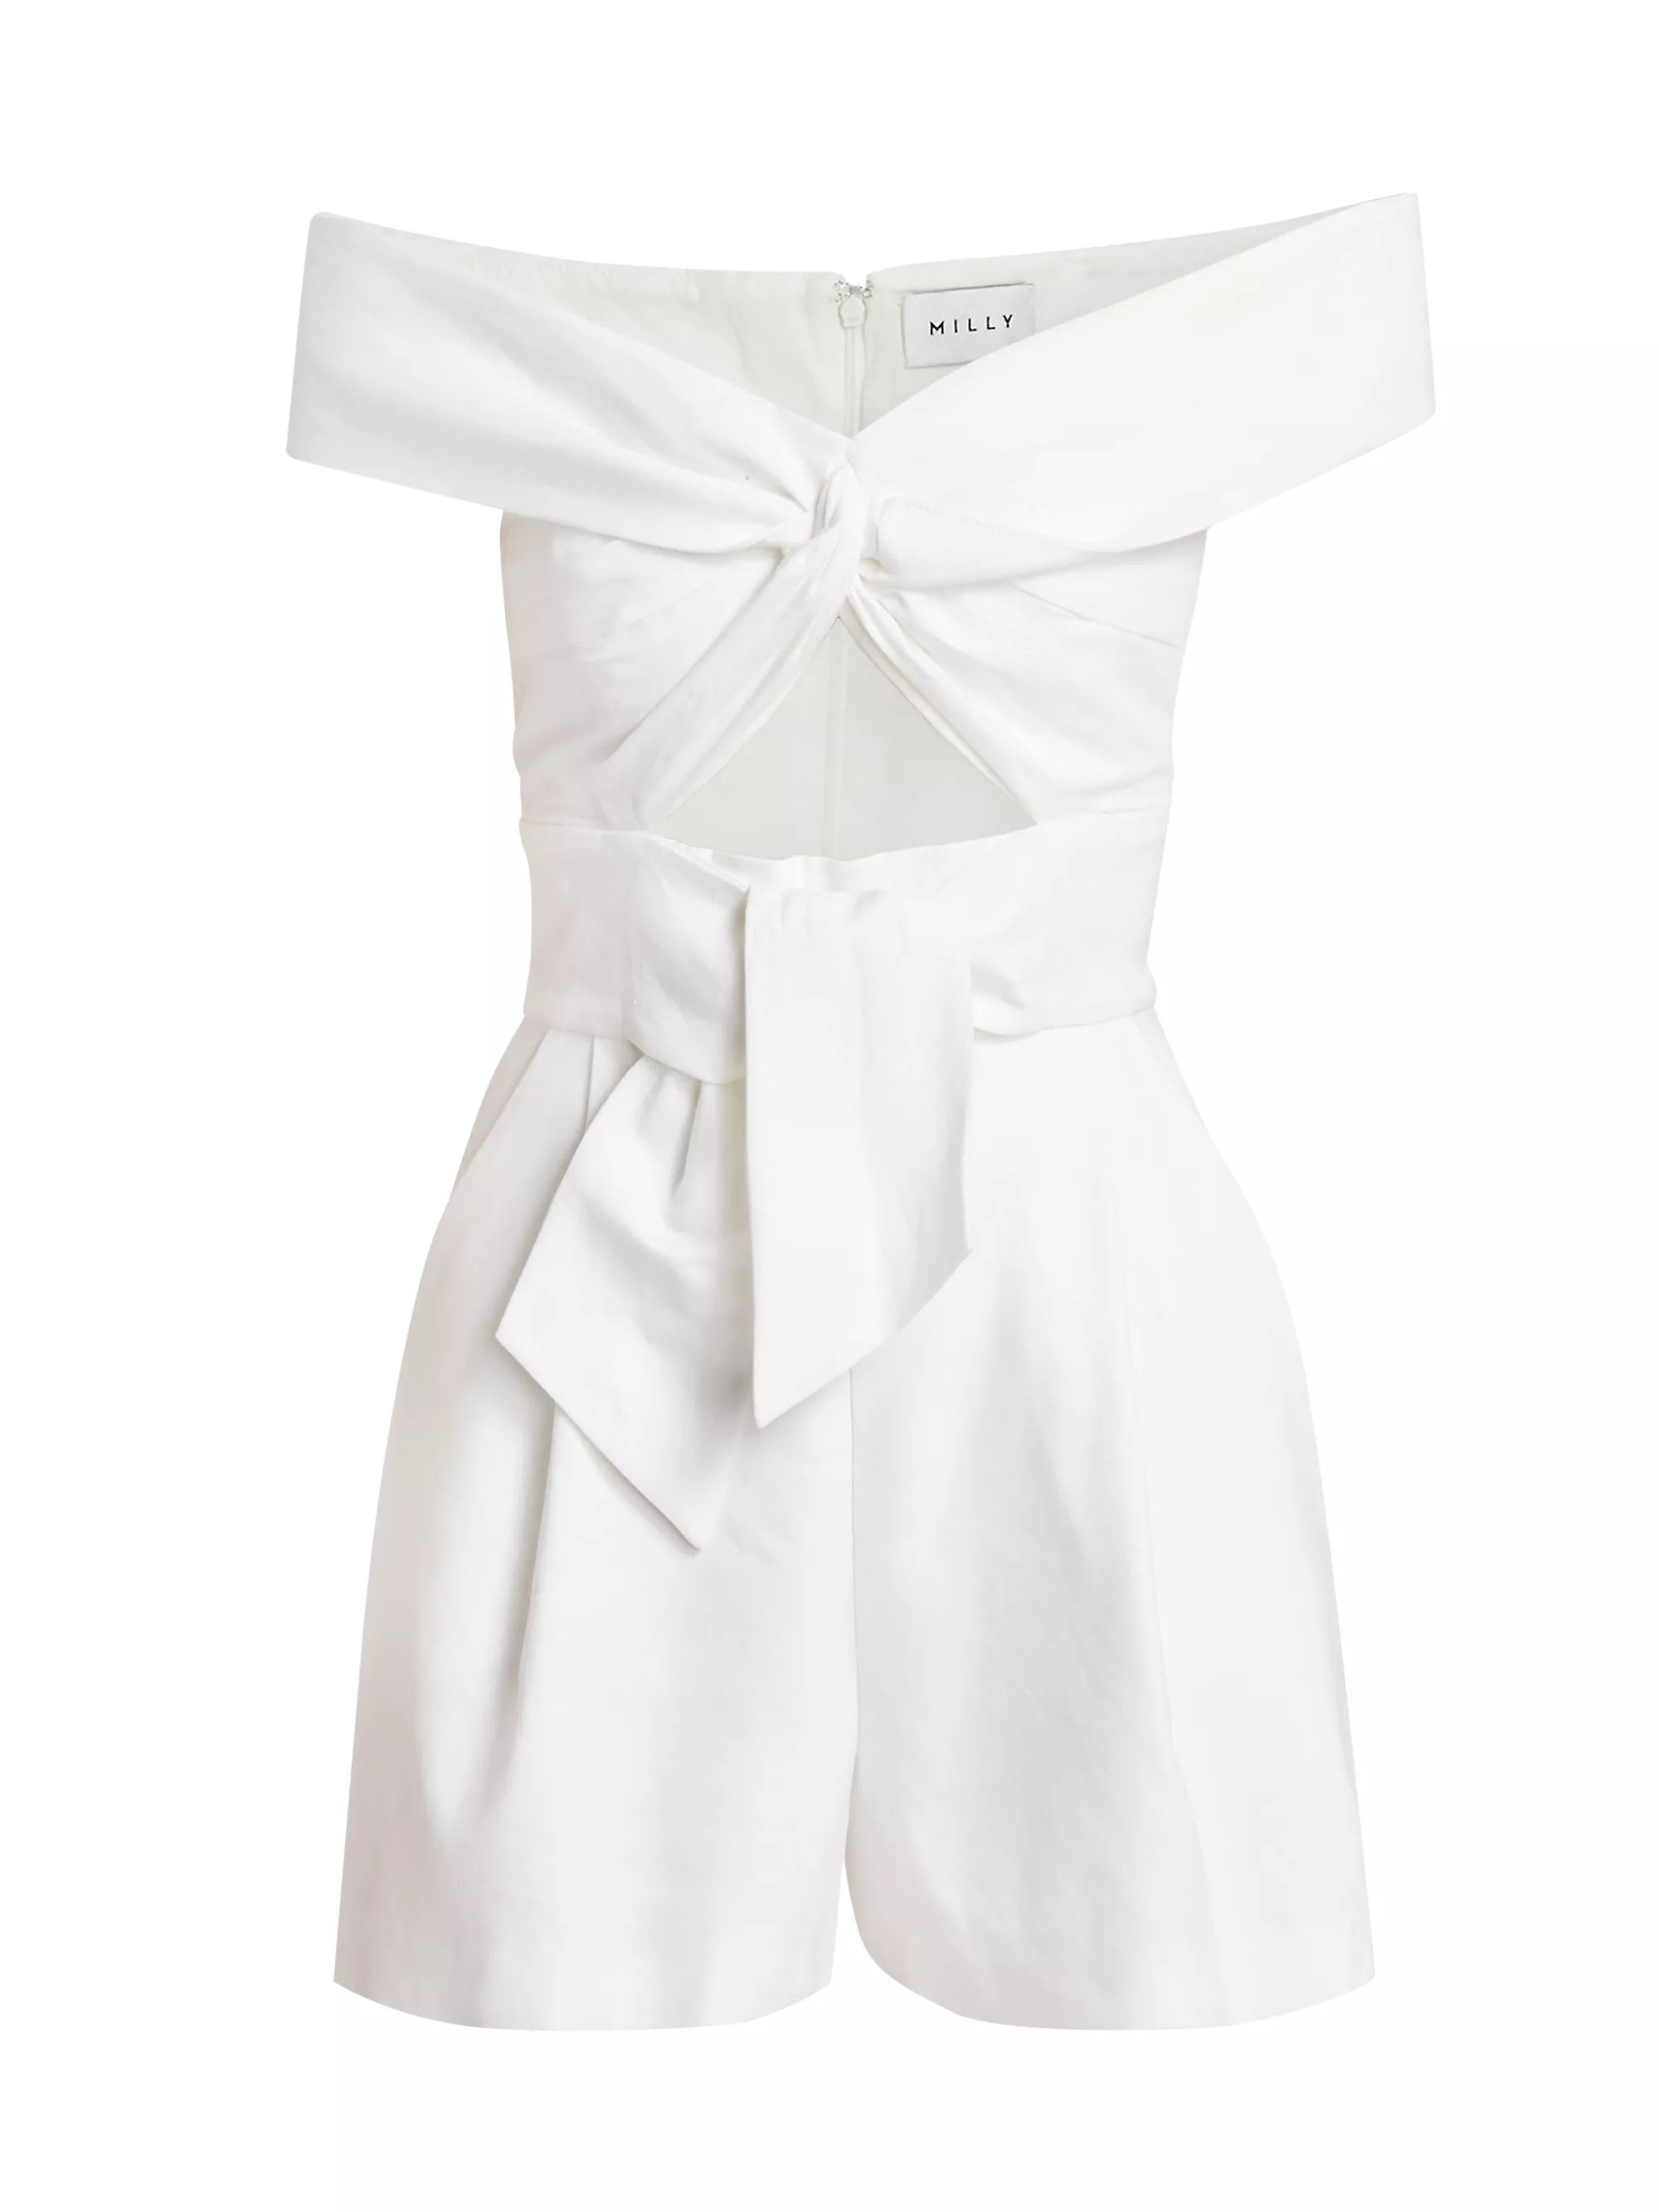 Women's ClothingJumpsuits & RompersMillyLinen-Blend Off-The-Shoulder Romper$325 | Saks Fifth Avenue